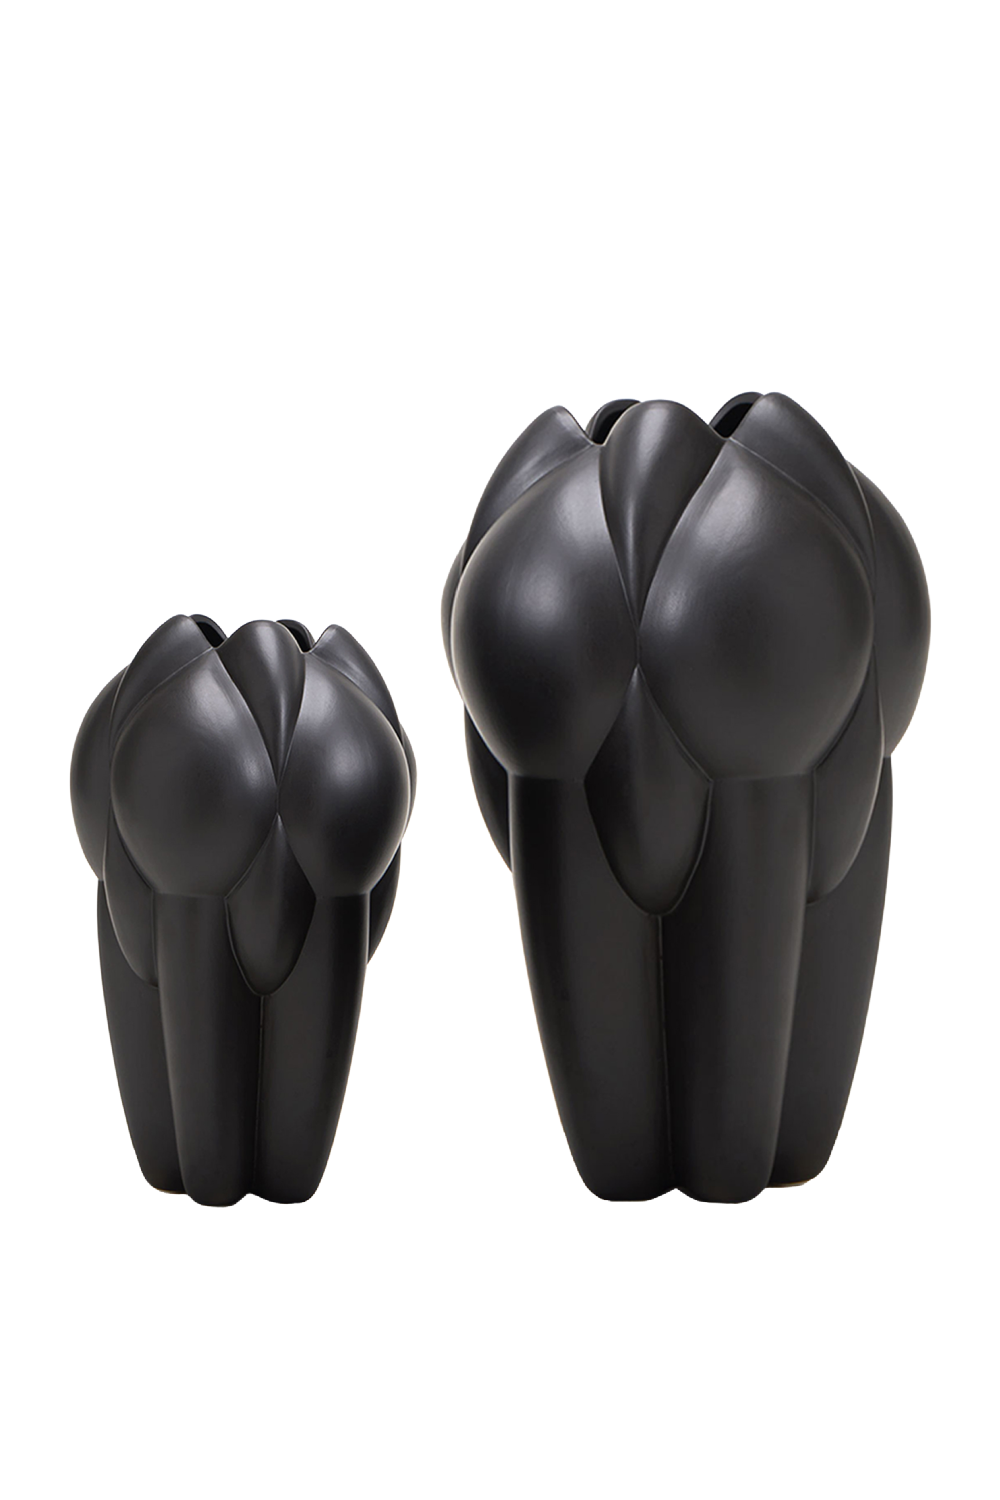 Black Ceramic Modern Vase | Liang & Eimil Lax | Oroa.com